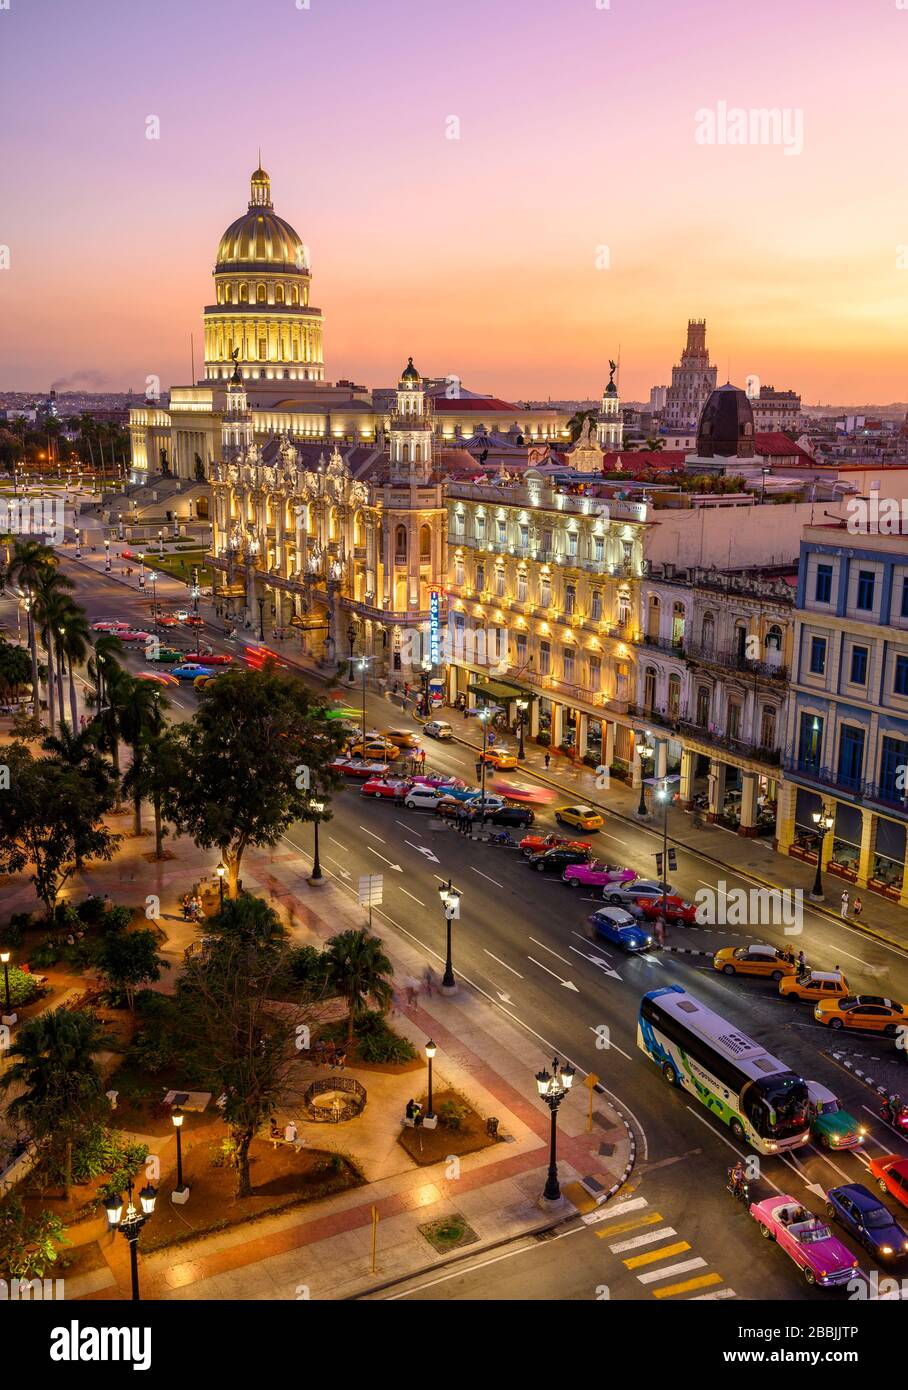 Parque Centrale with  El Capitolio or the National Capitol Building,  Gran Teatro de La Habana, and the Hotel Inglaterra,  Havana, Cuba Stock Photo